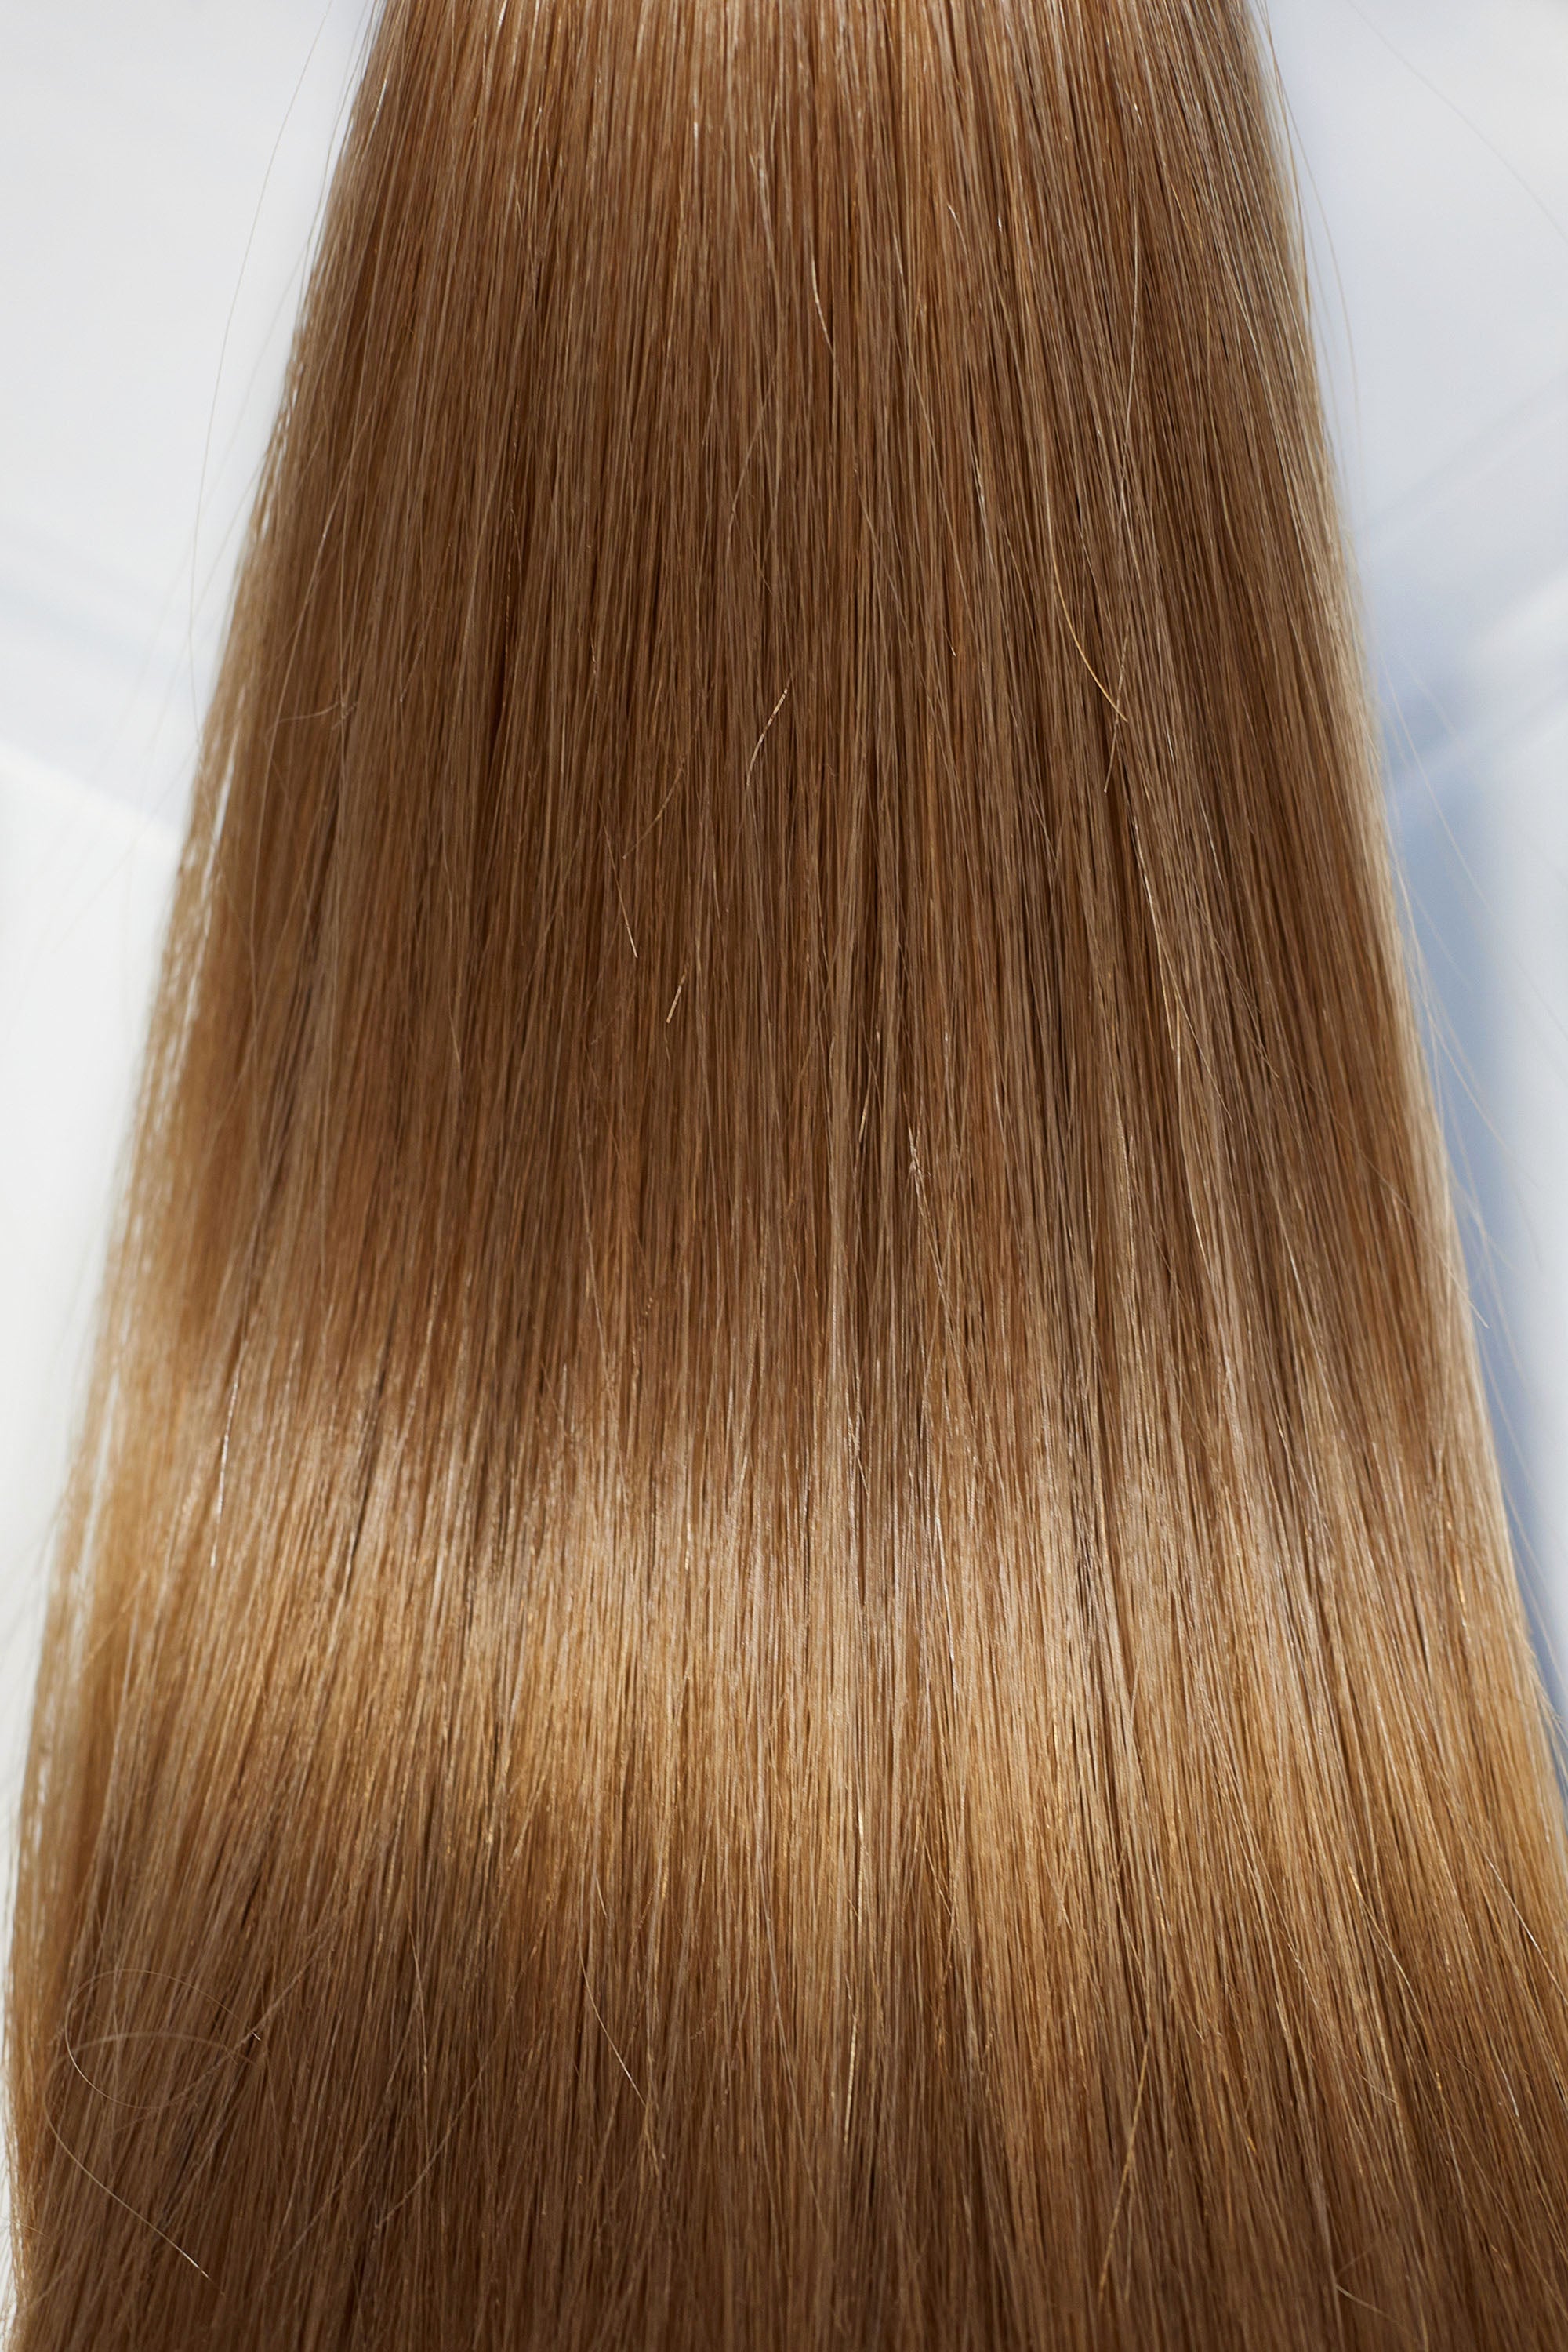 Behair professional Keratin Tip "Premium" 26" (65cm) Natural Straight Caramel Brown #8 - 25g (Micro - 0.5g each pcs) hair extensions